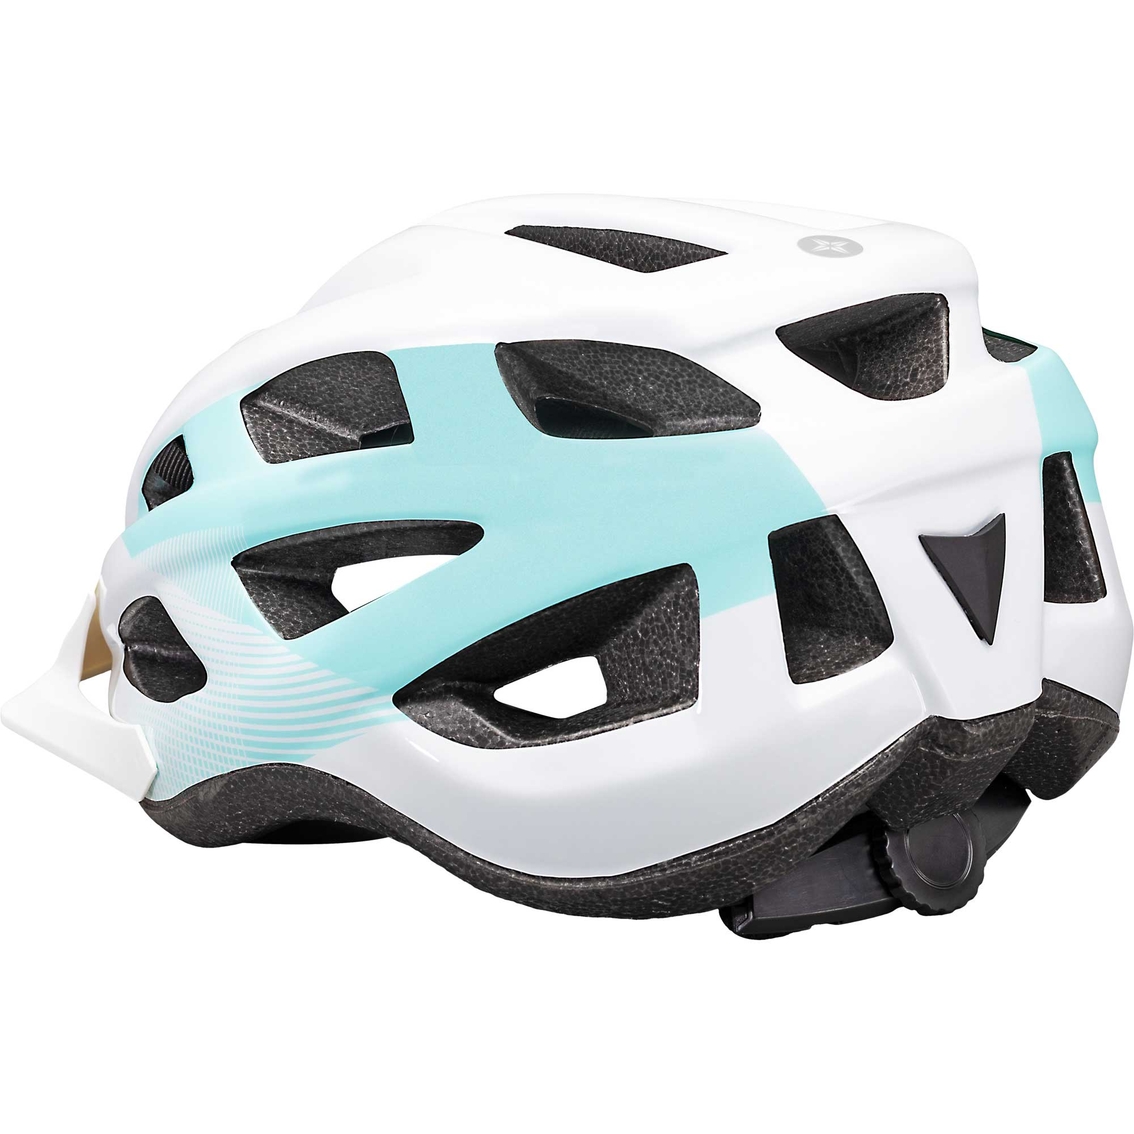 Schwinn Breeze Adult Bike Helmet, White and Teal - Image 2 of 2